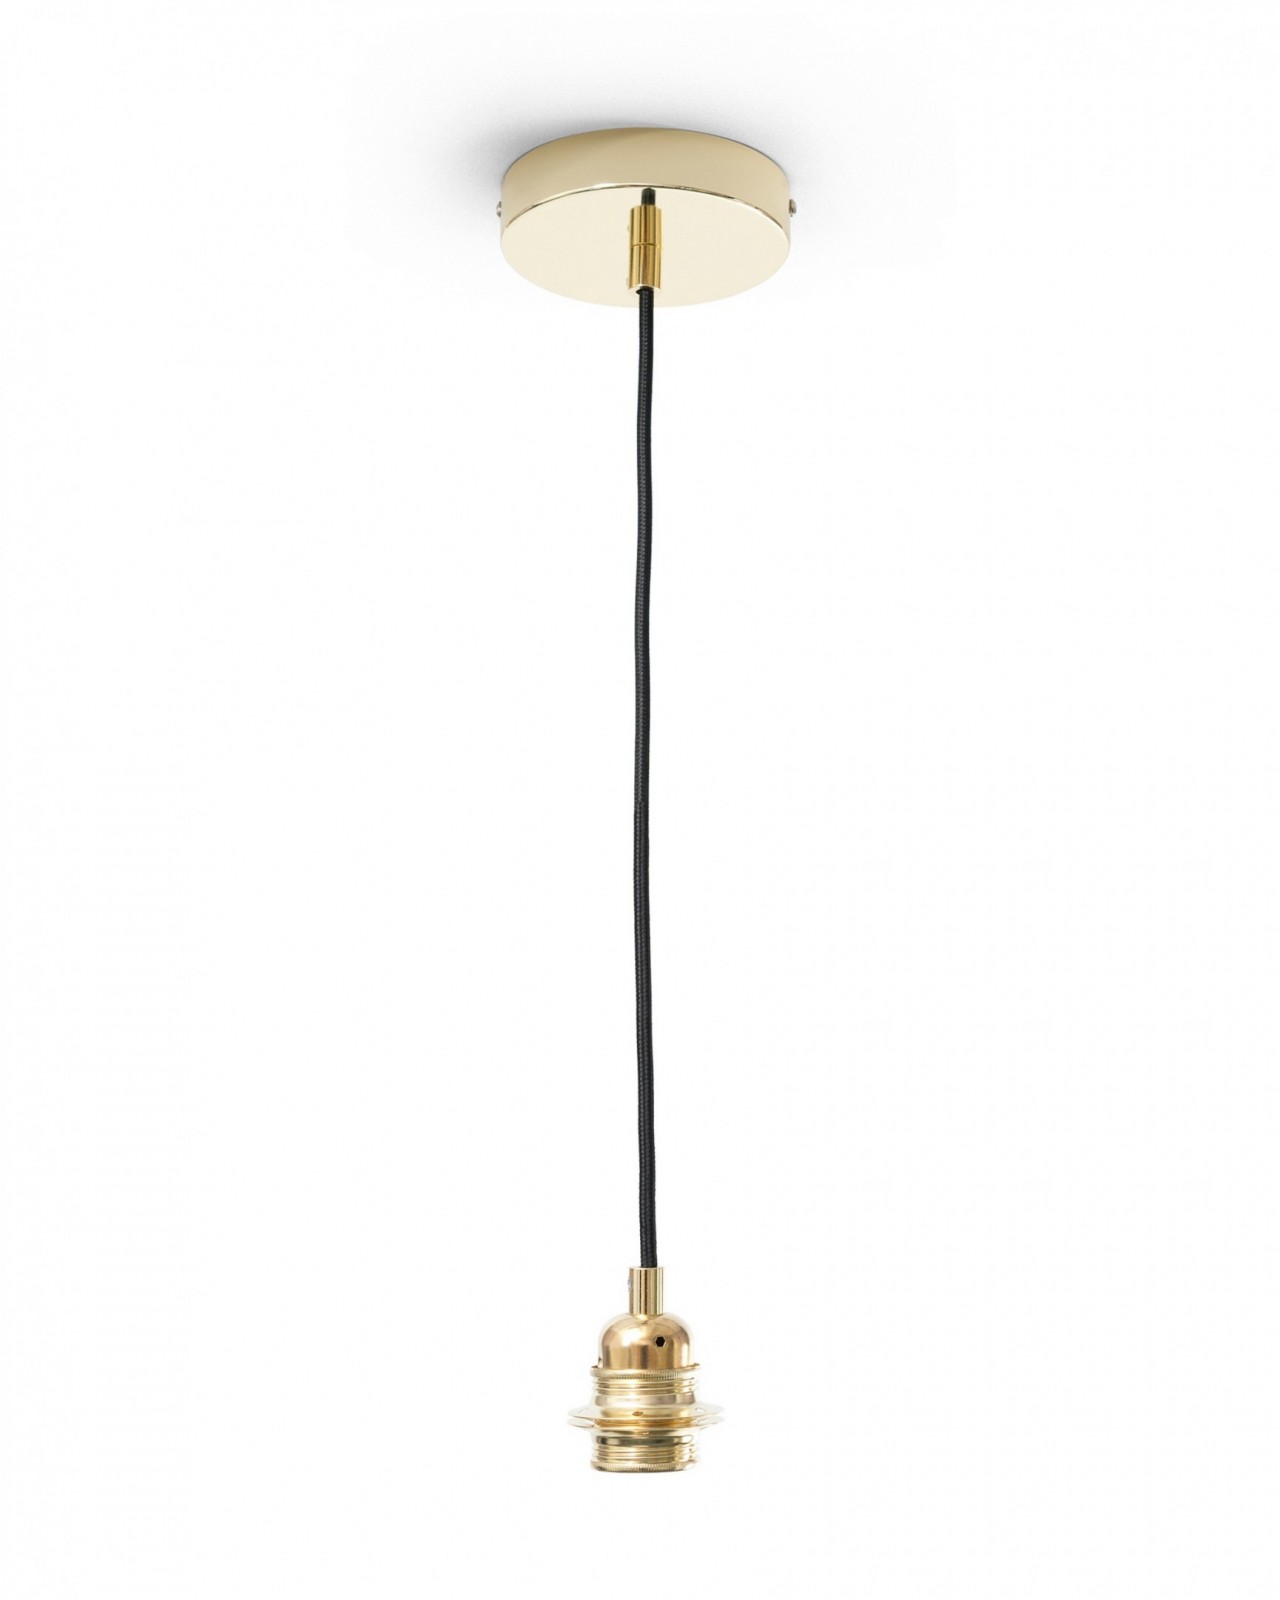 WOODSTOCK Pendant Lamp